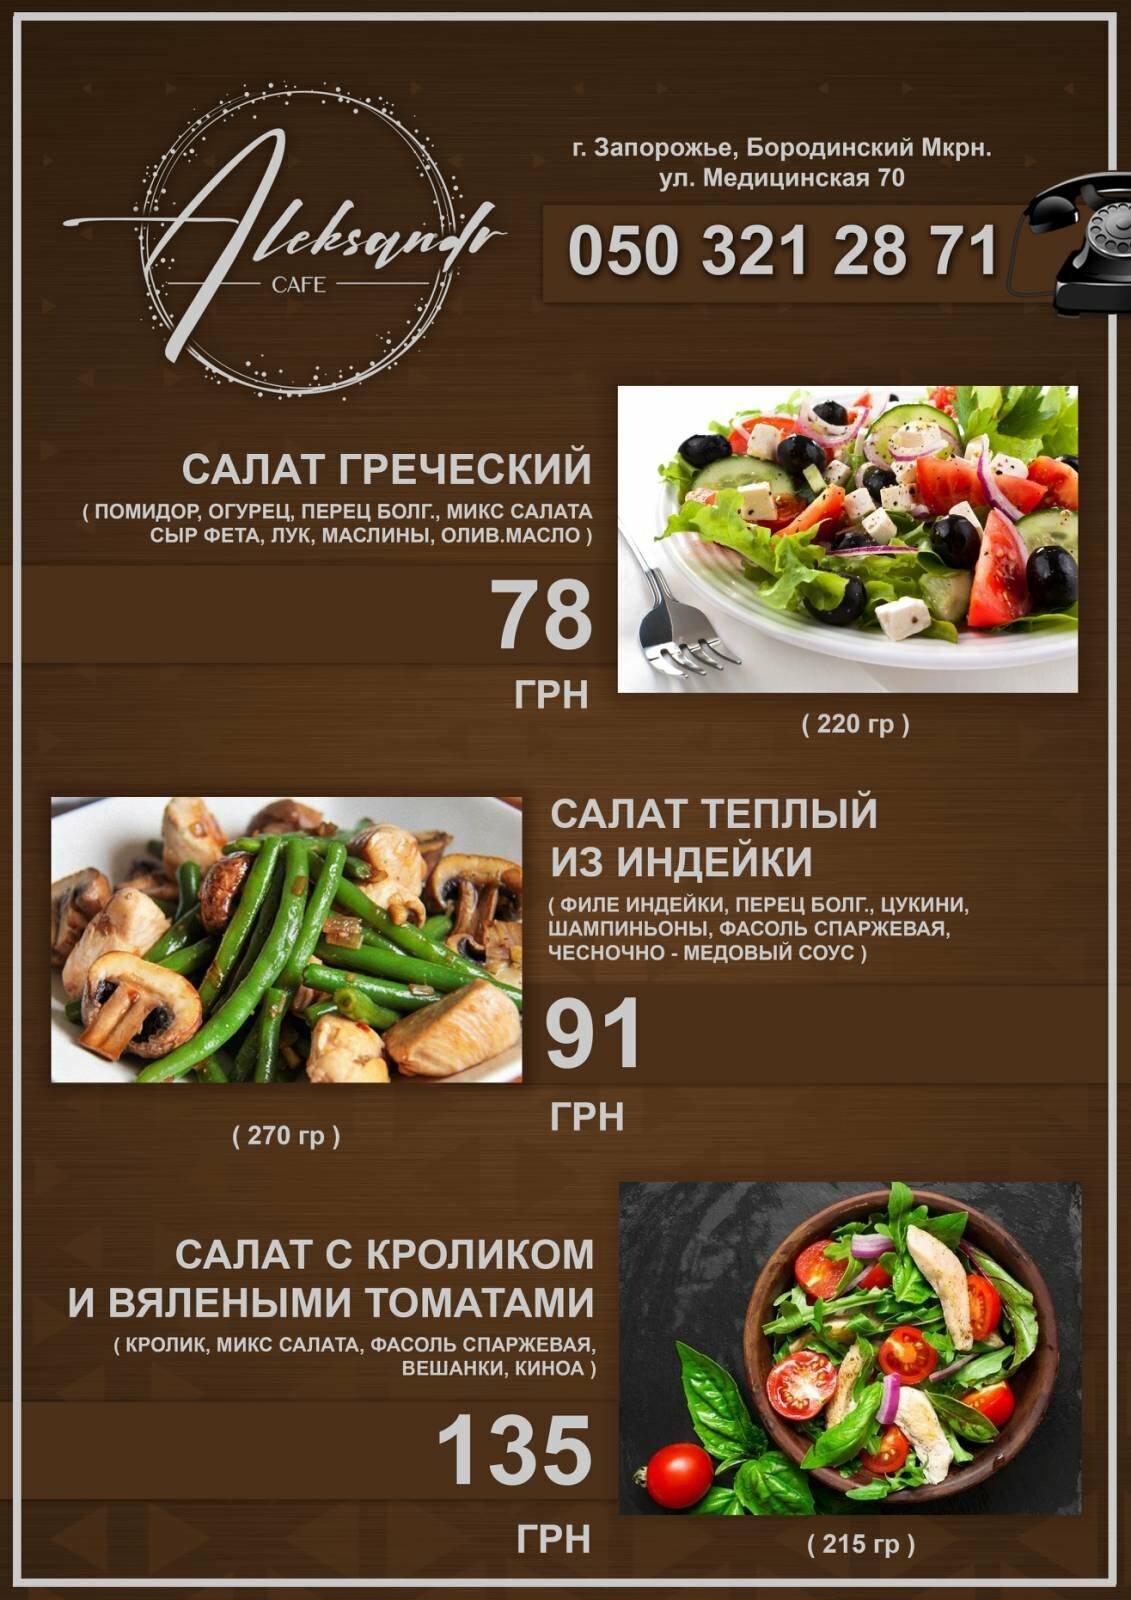 Доставка еды в Запорожье кафе Александр, фото-4